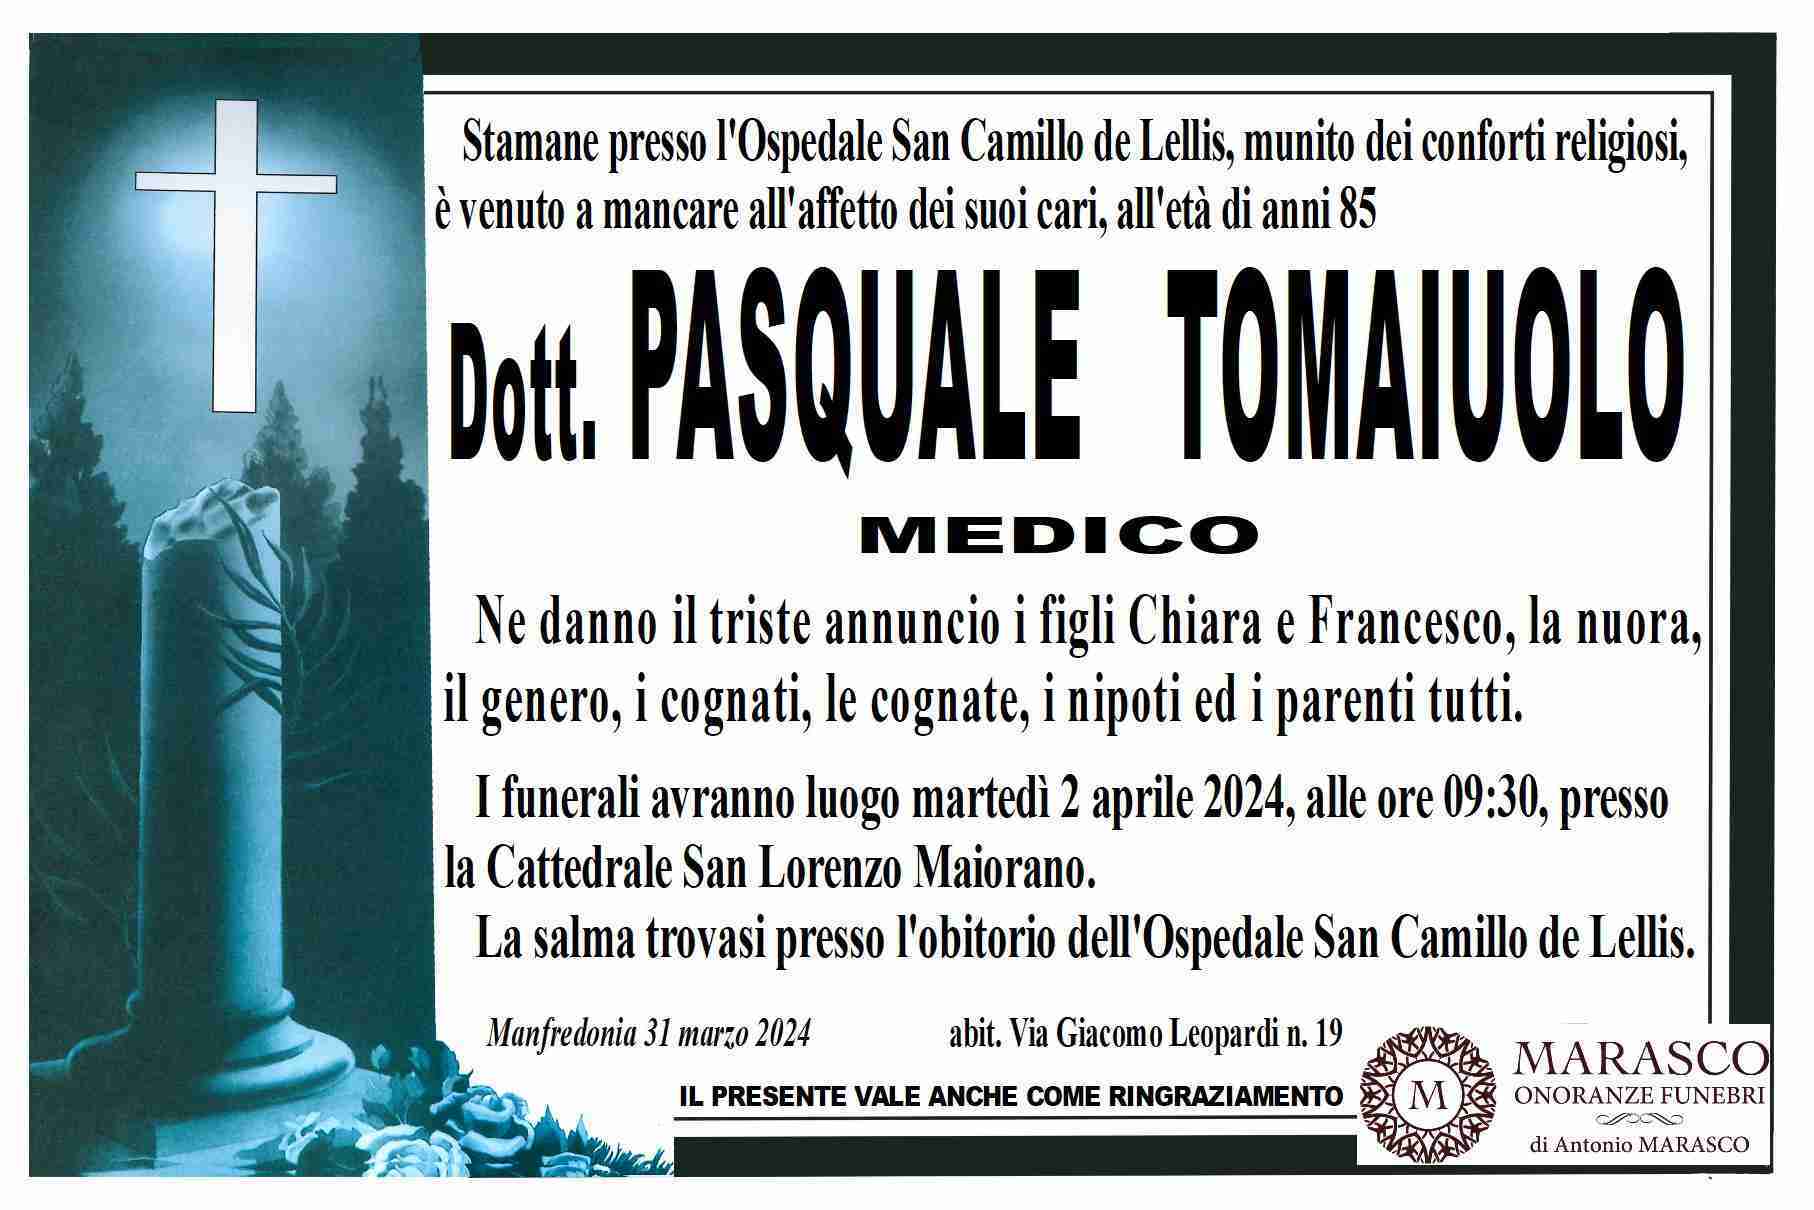 Pasquale Tomaiuolo